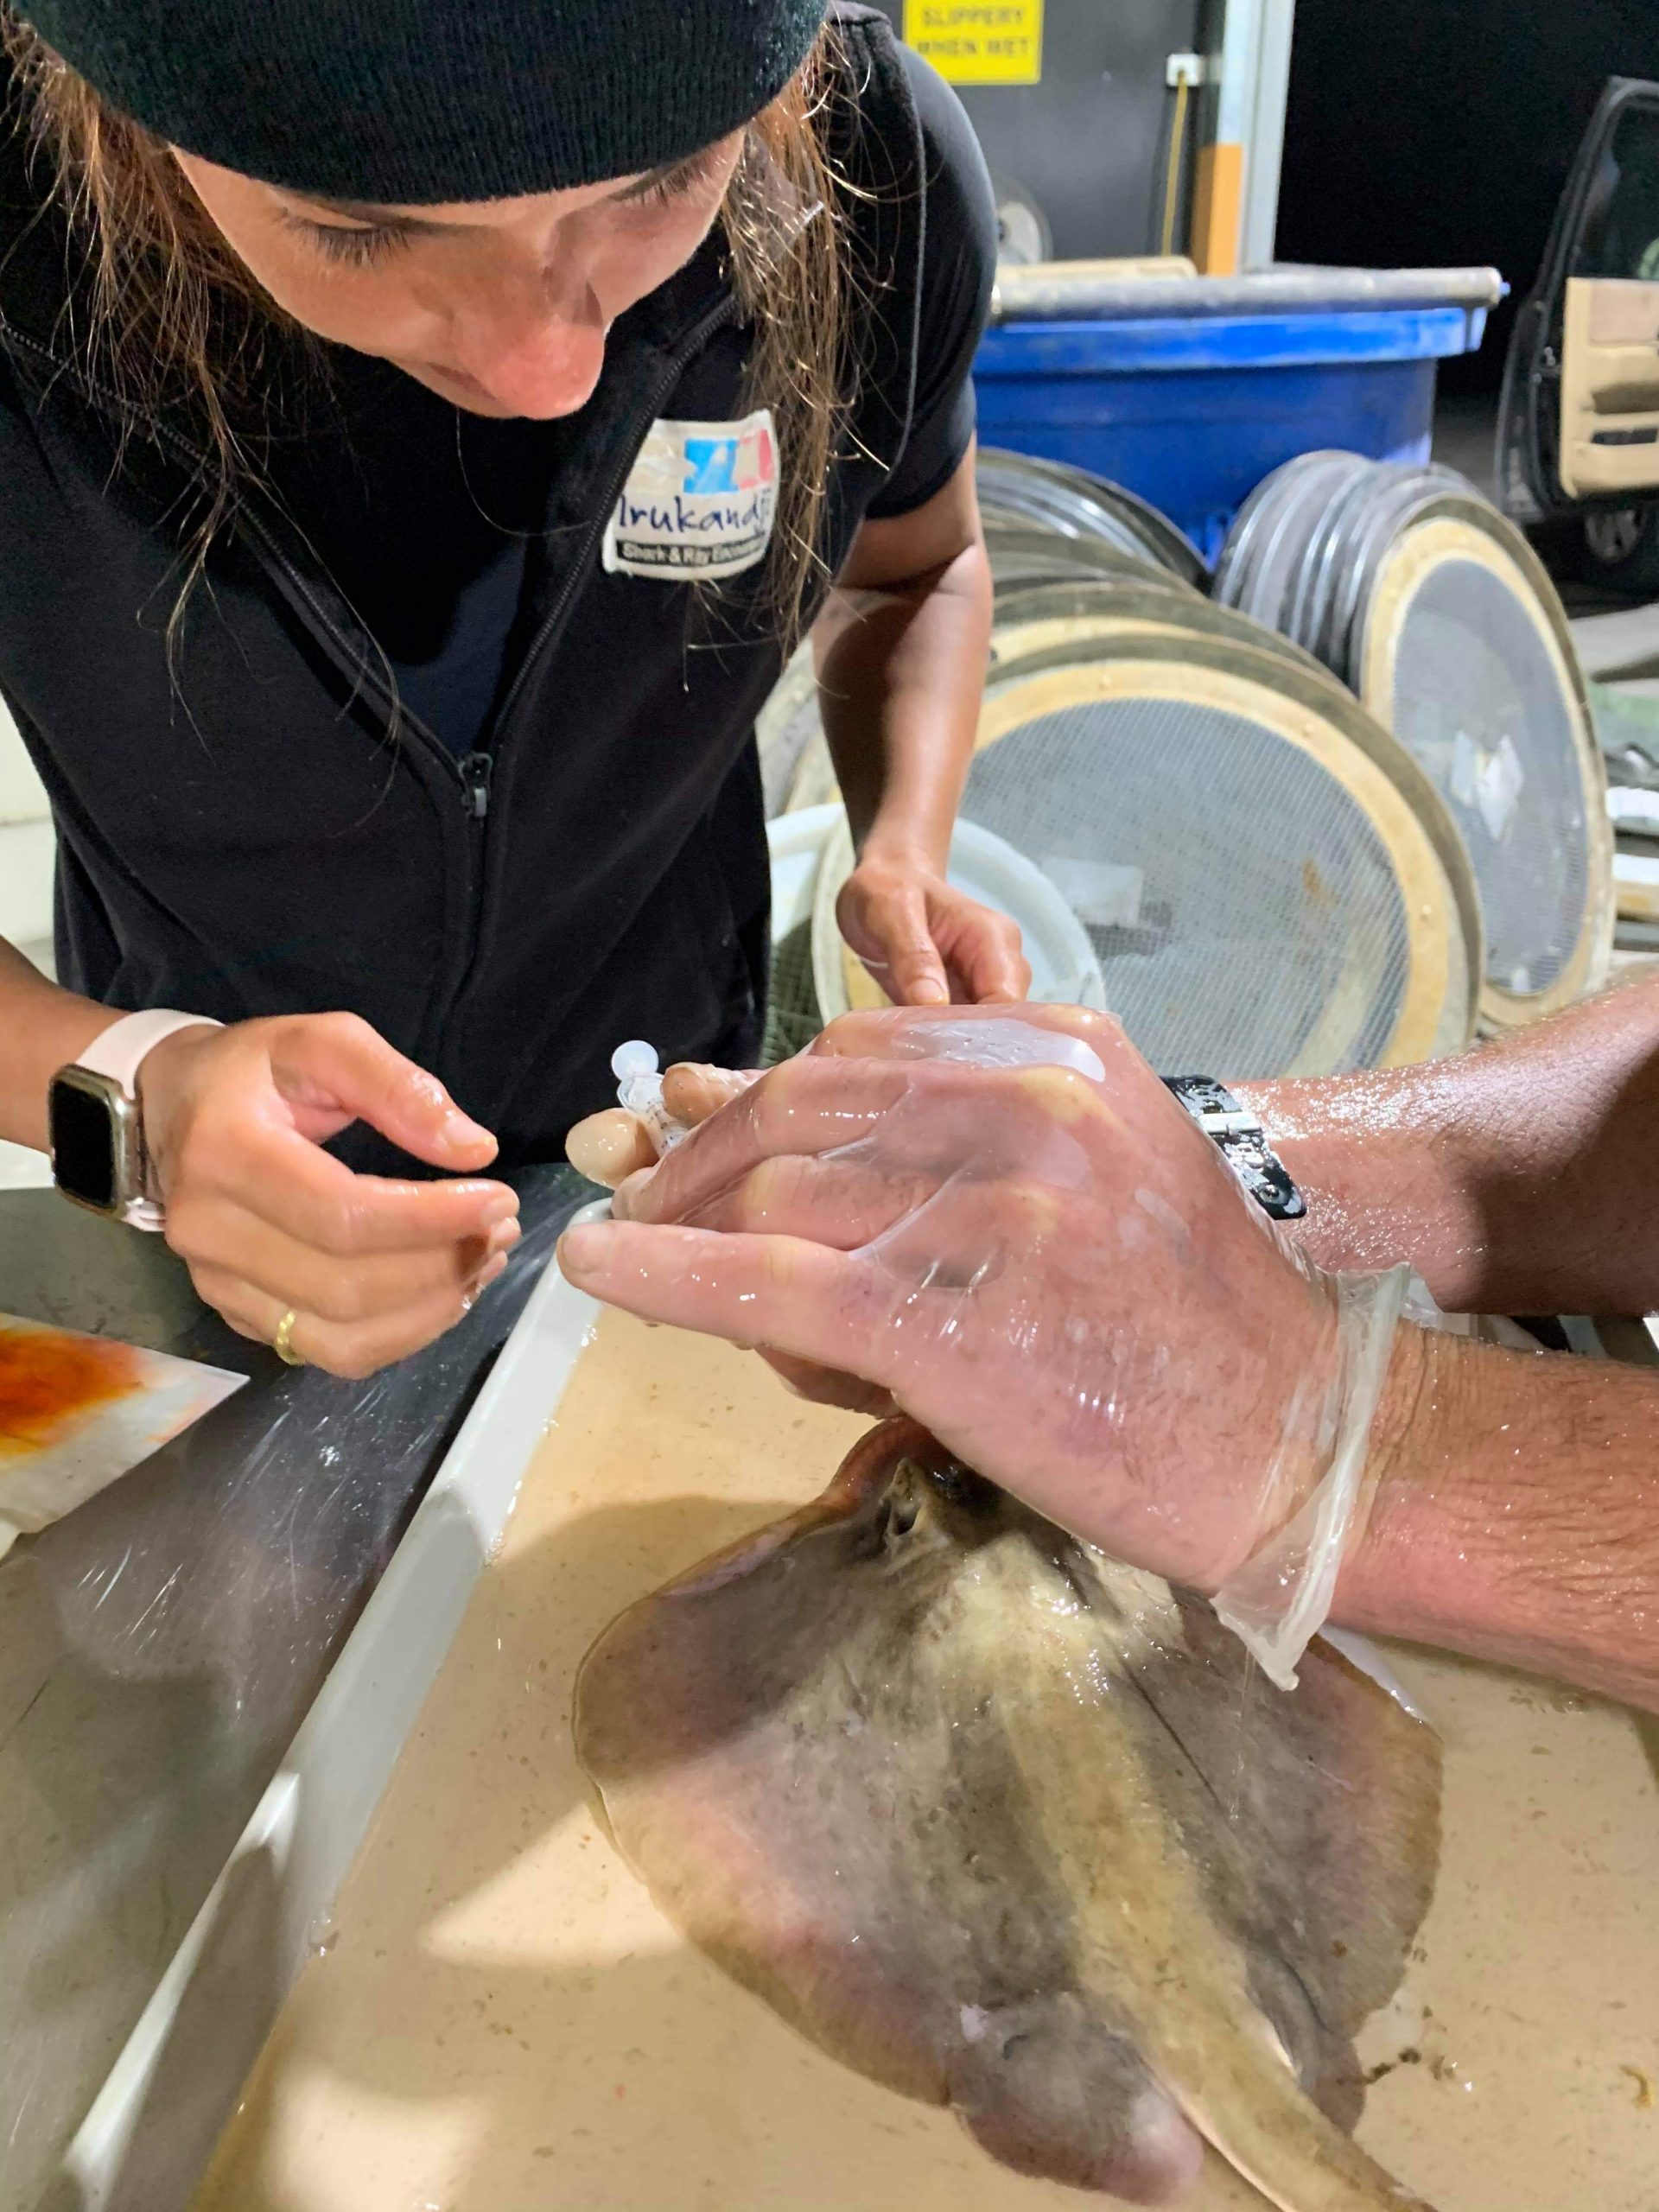 Treating the injured stingrays